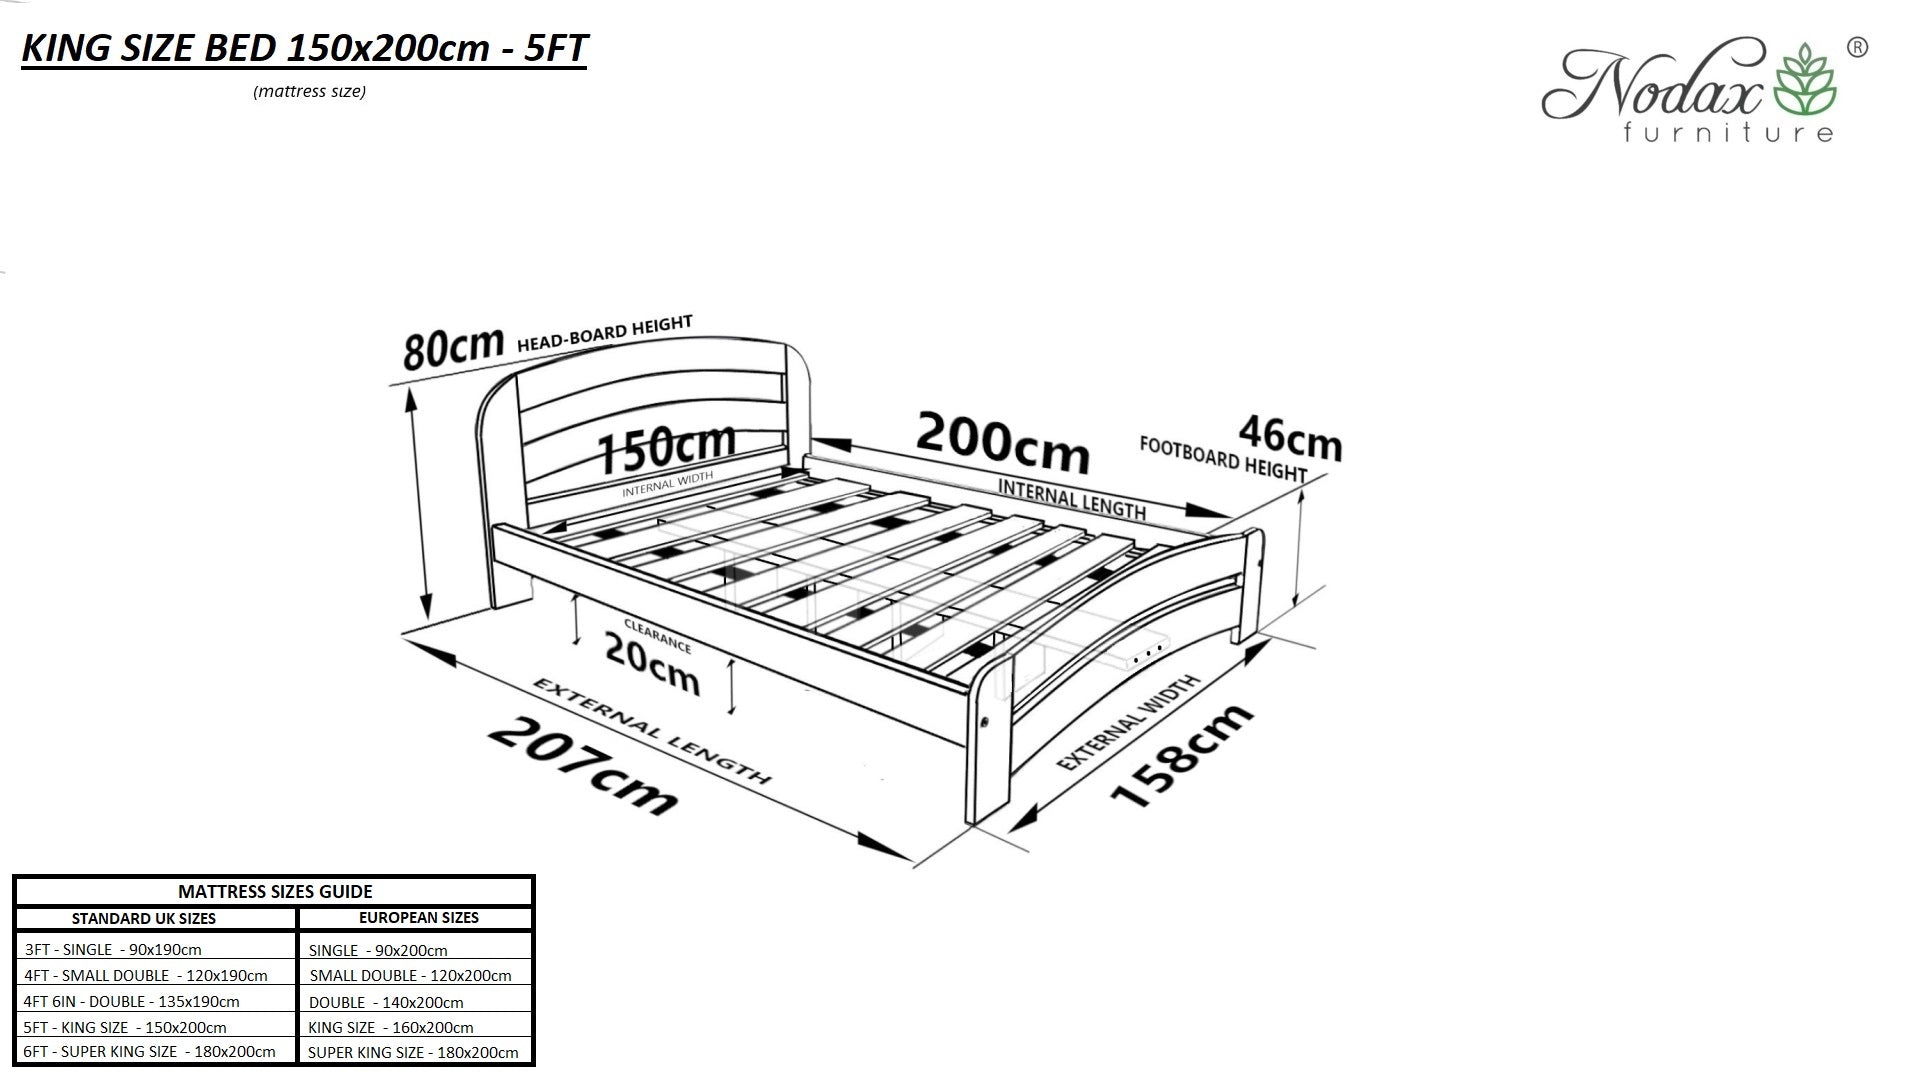 Wooden-bed-frame-dimensions-5ft